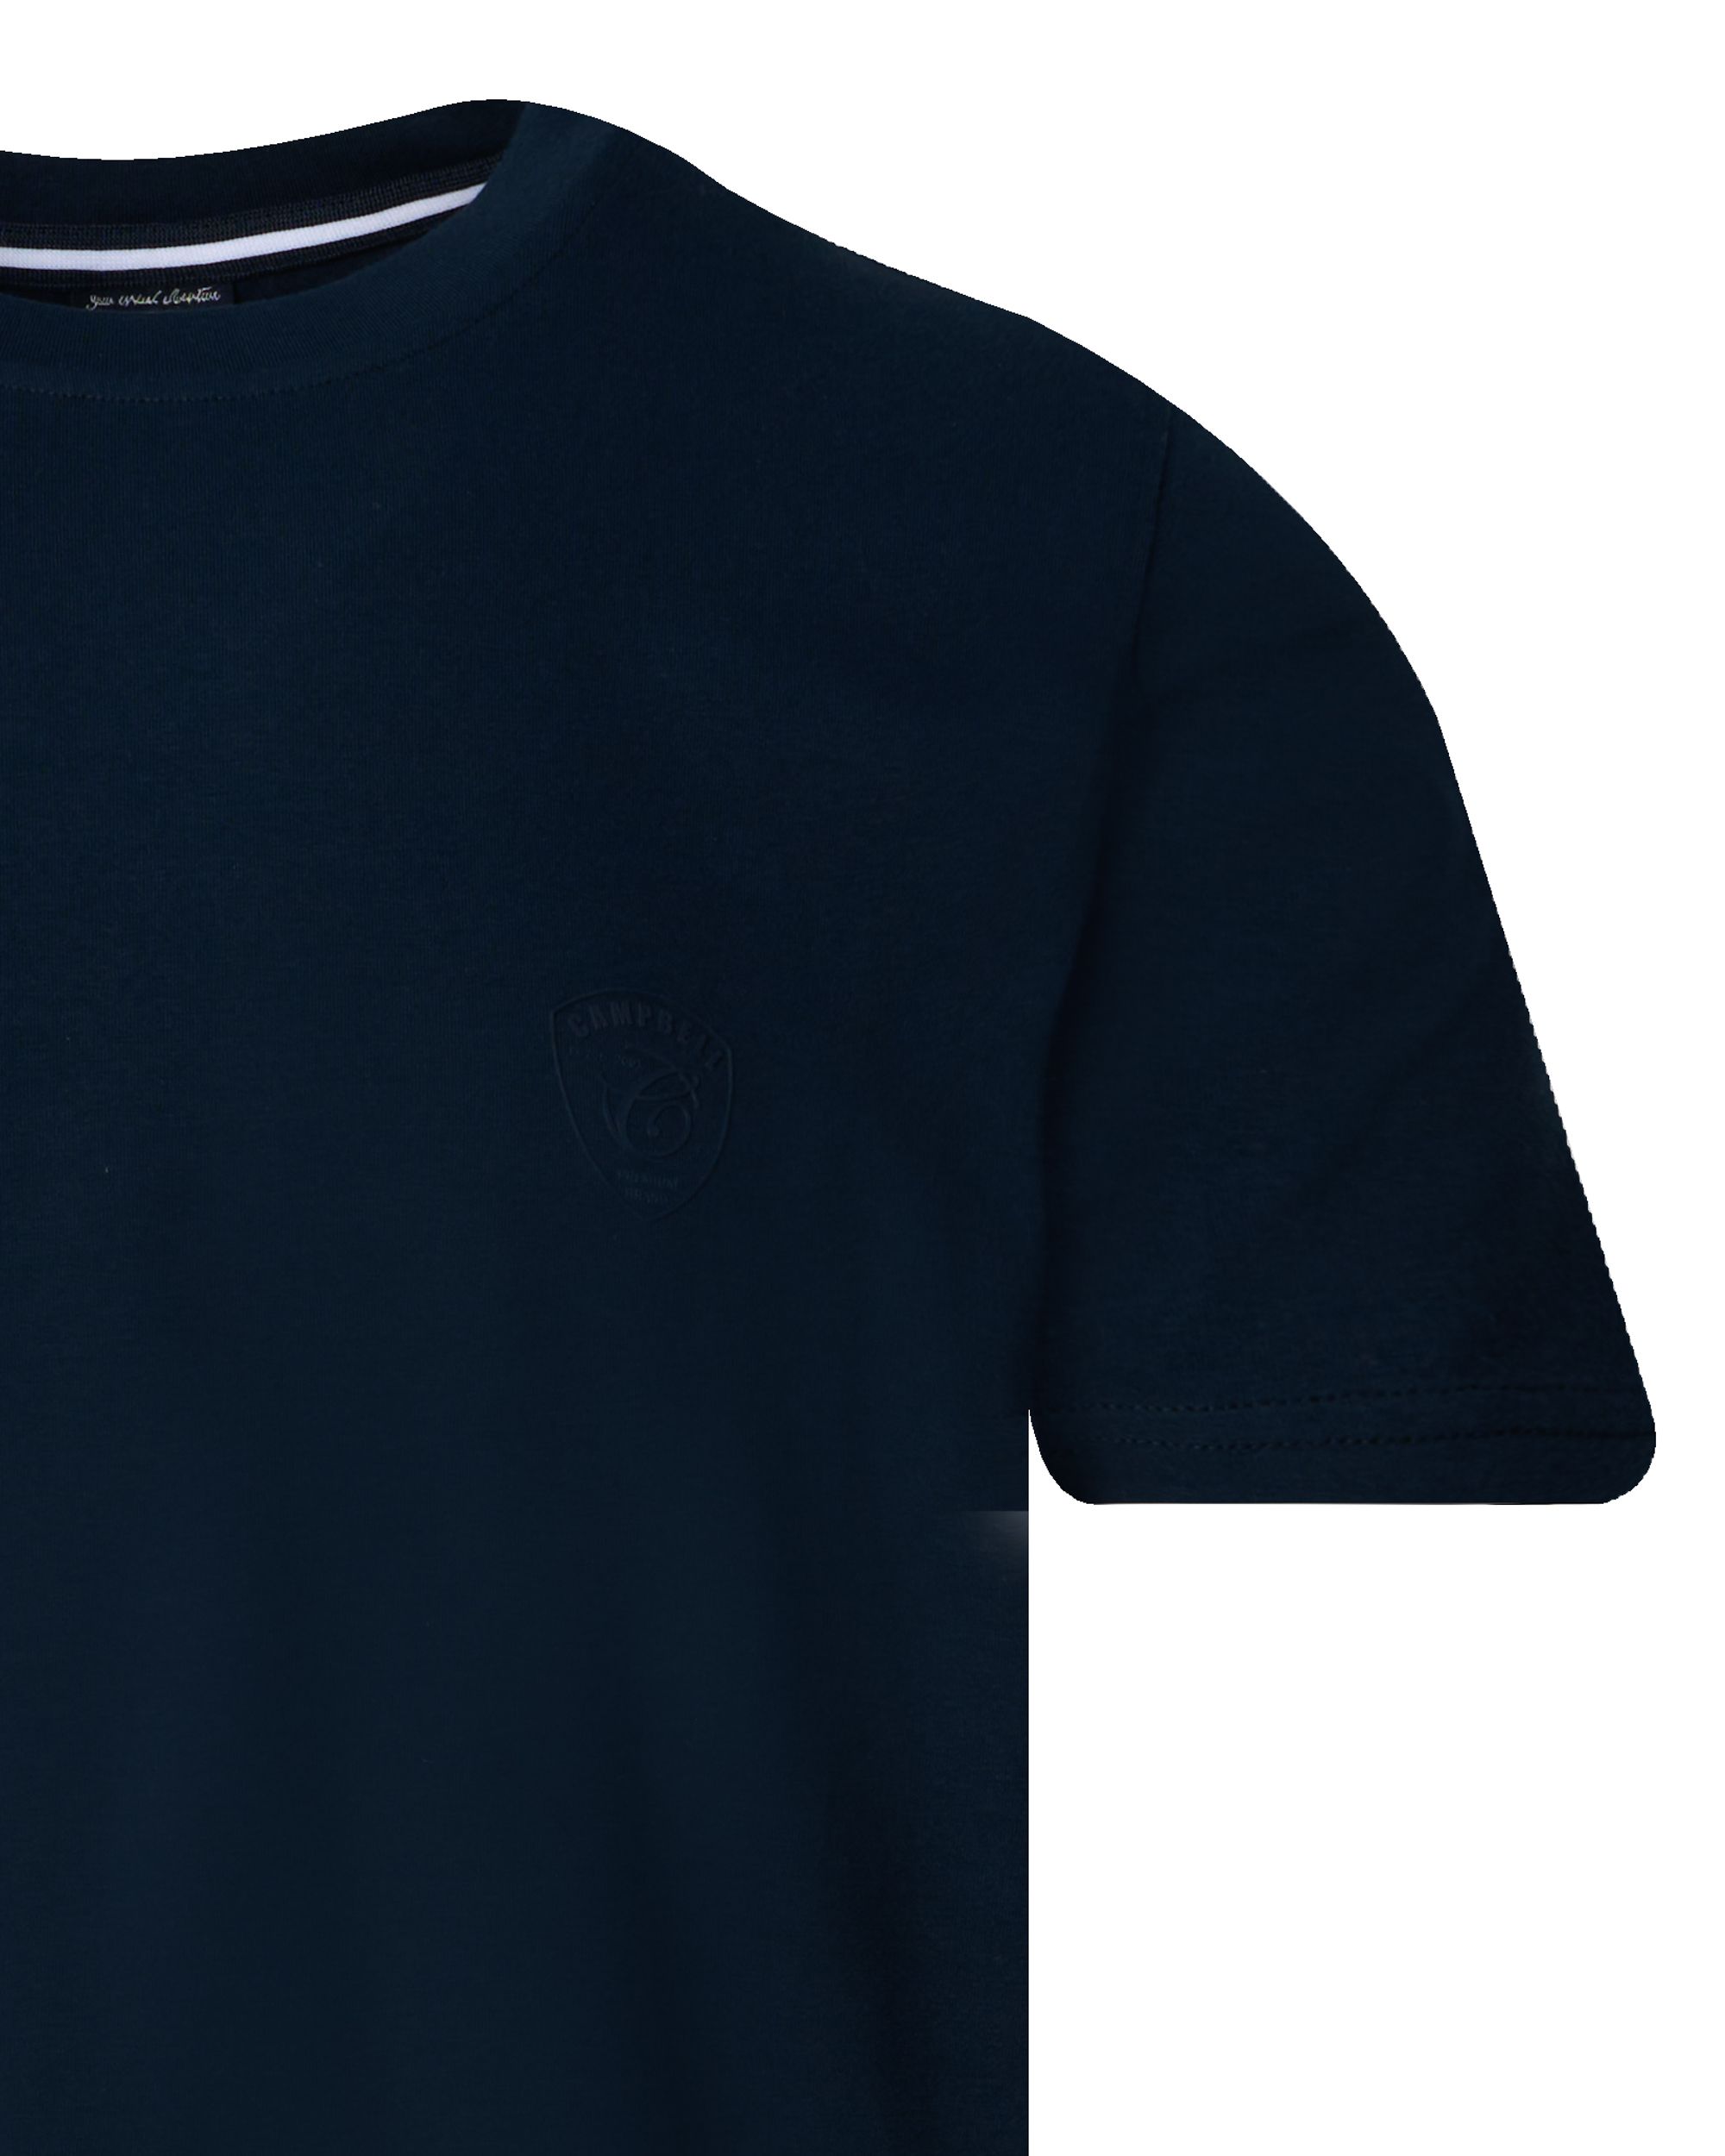 Campbell Classic Soho T-shirt KM NAVY 081503-001-L